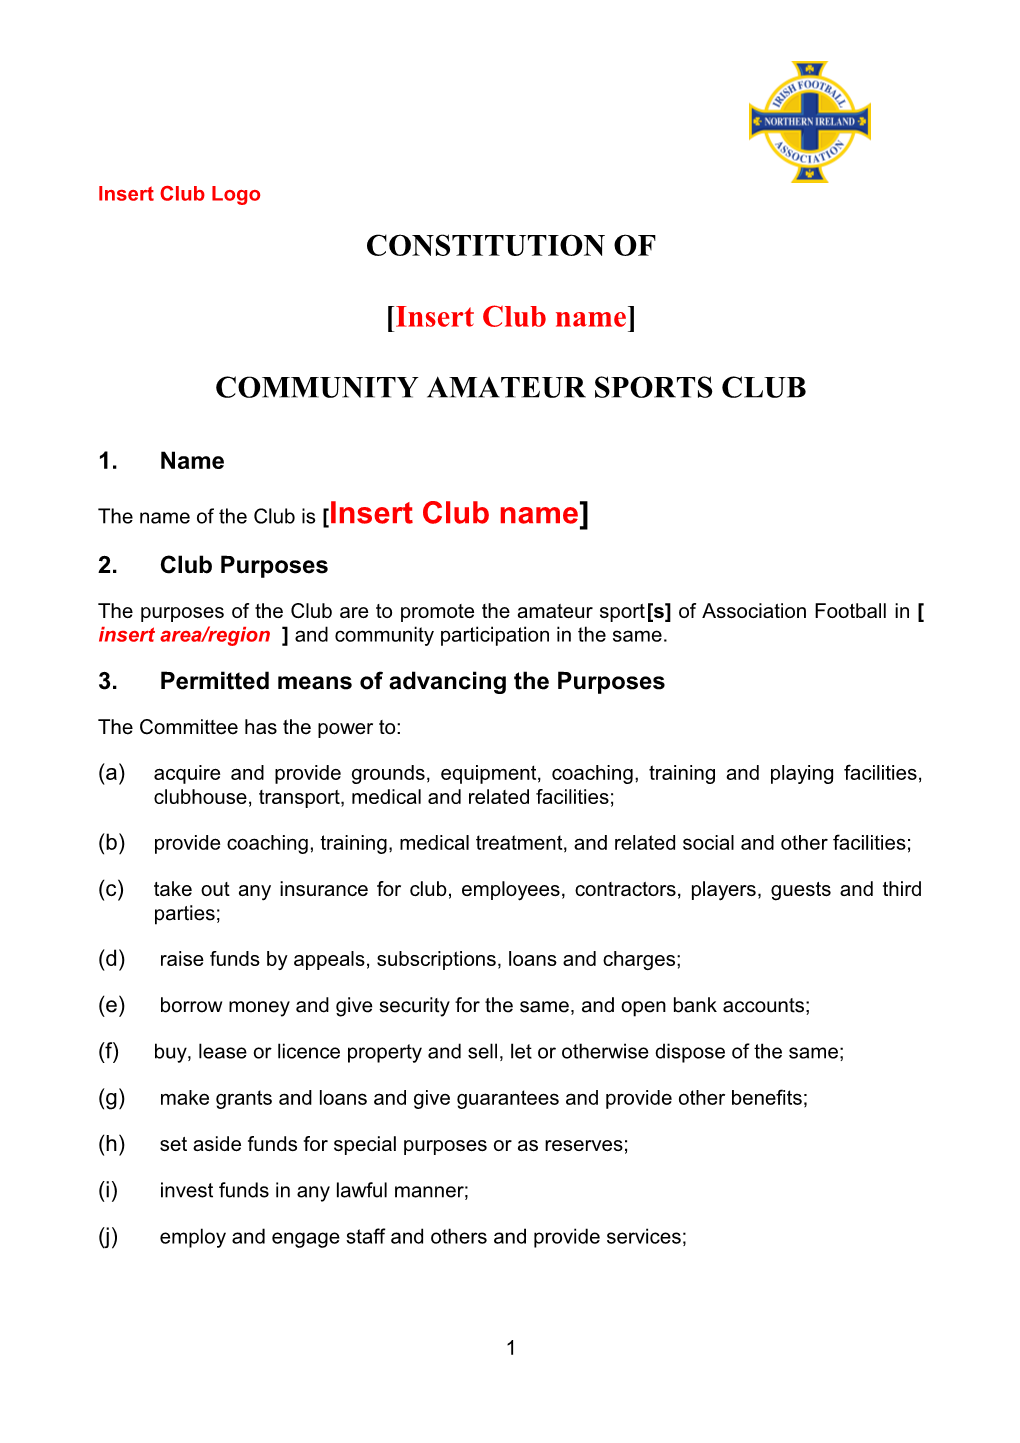 Community Amateur Sports Club